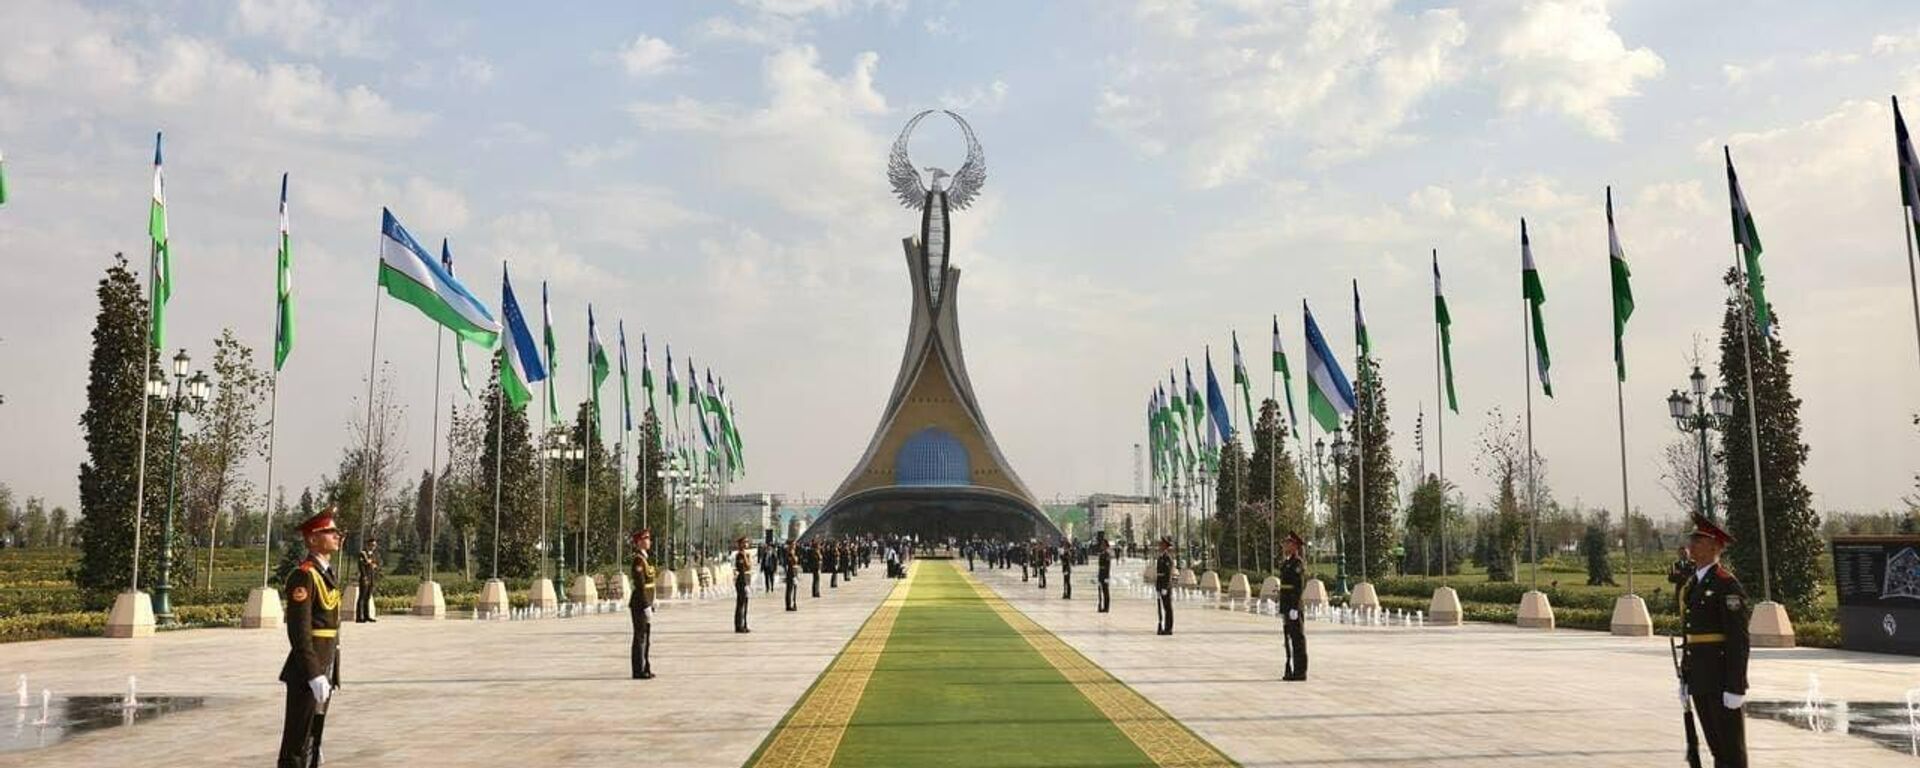 Монумент Независимости в Ташкенте - Sputnik Узбекистан, 1920, 31.08.2021